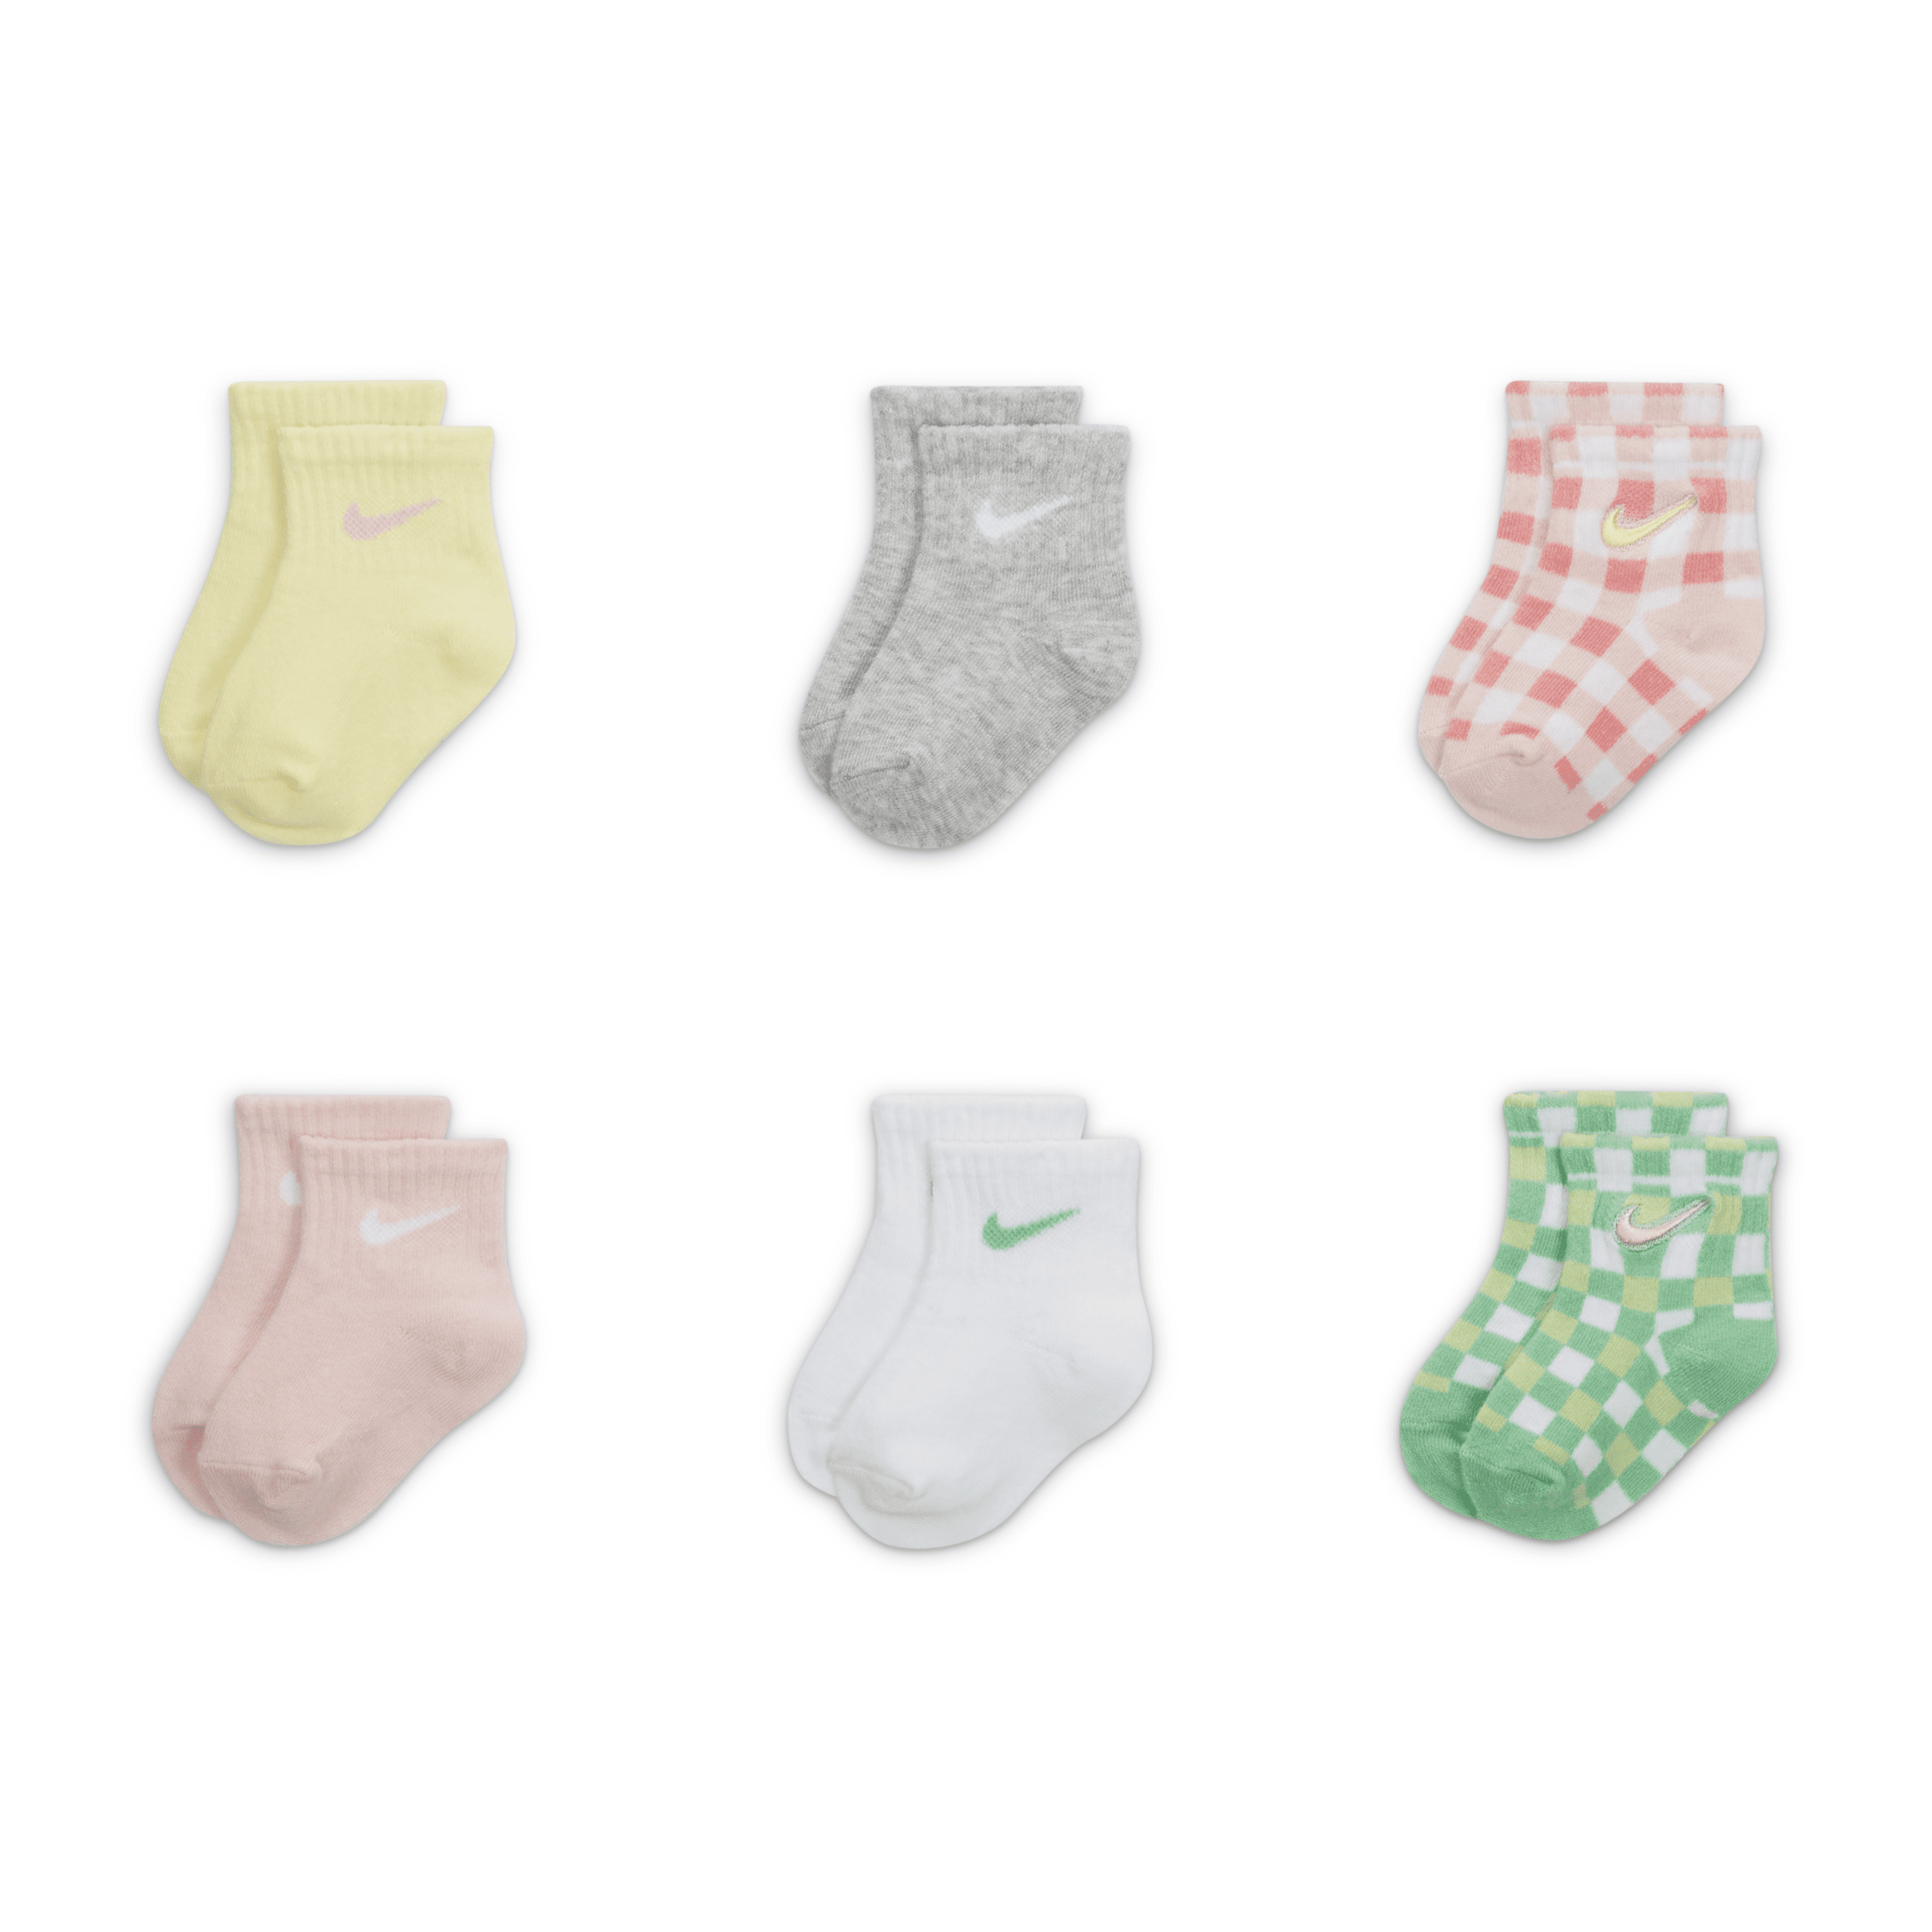 Nike Infant Crew Socks (6 Pairs) Baby Crew Socks In Green